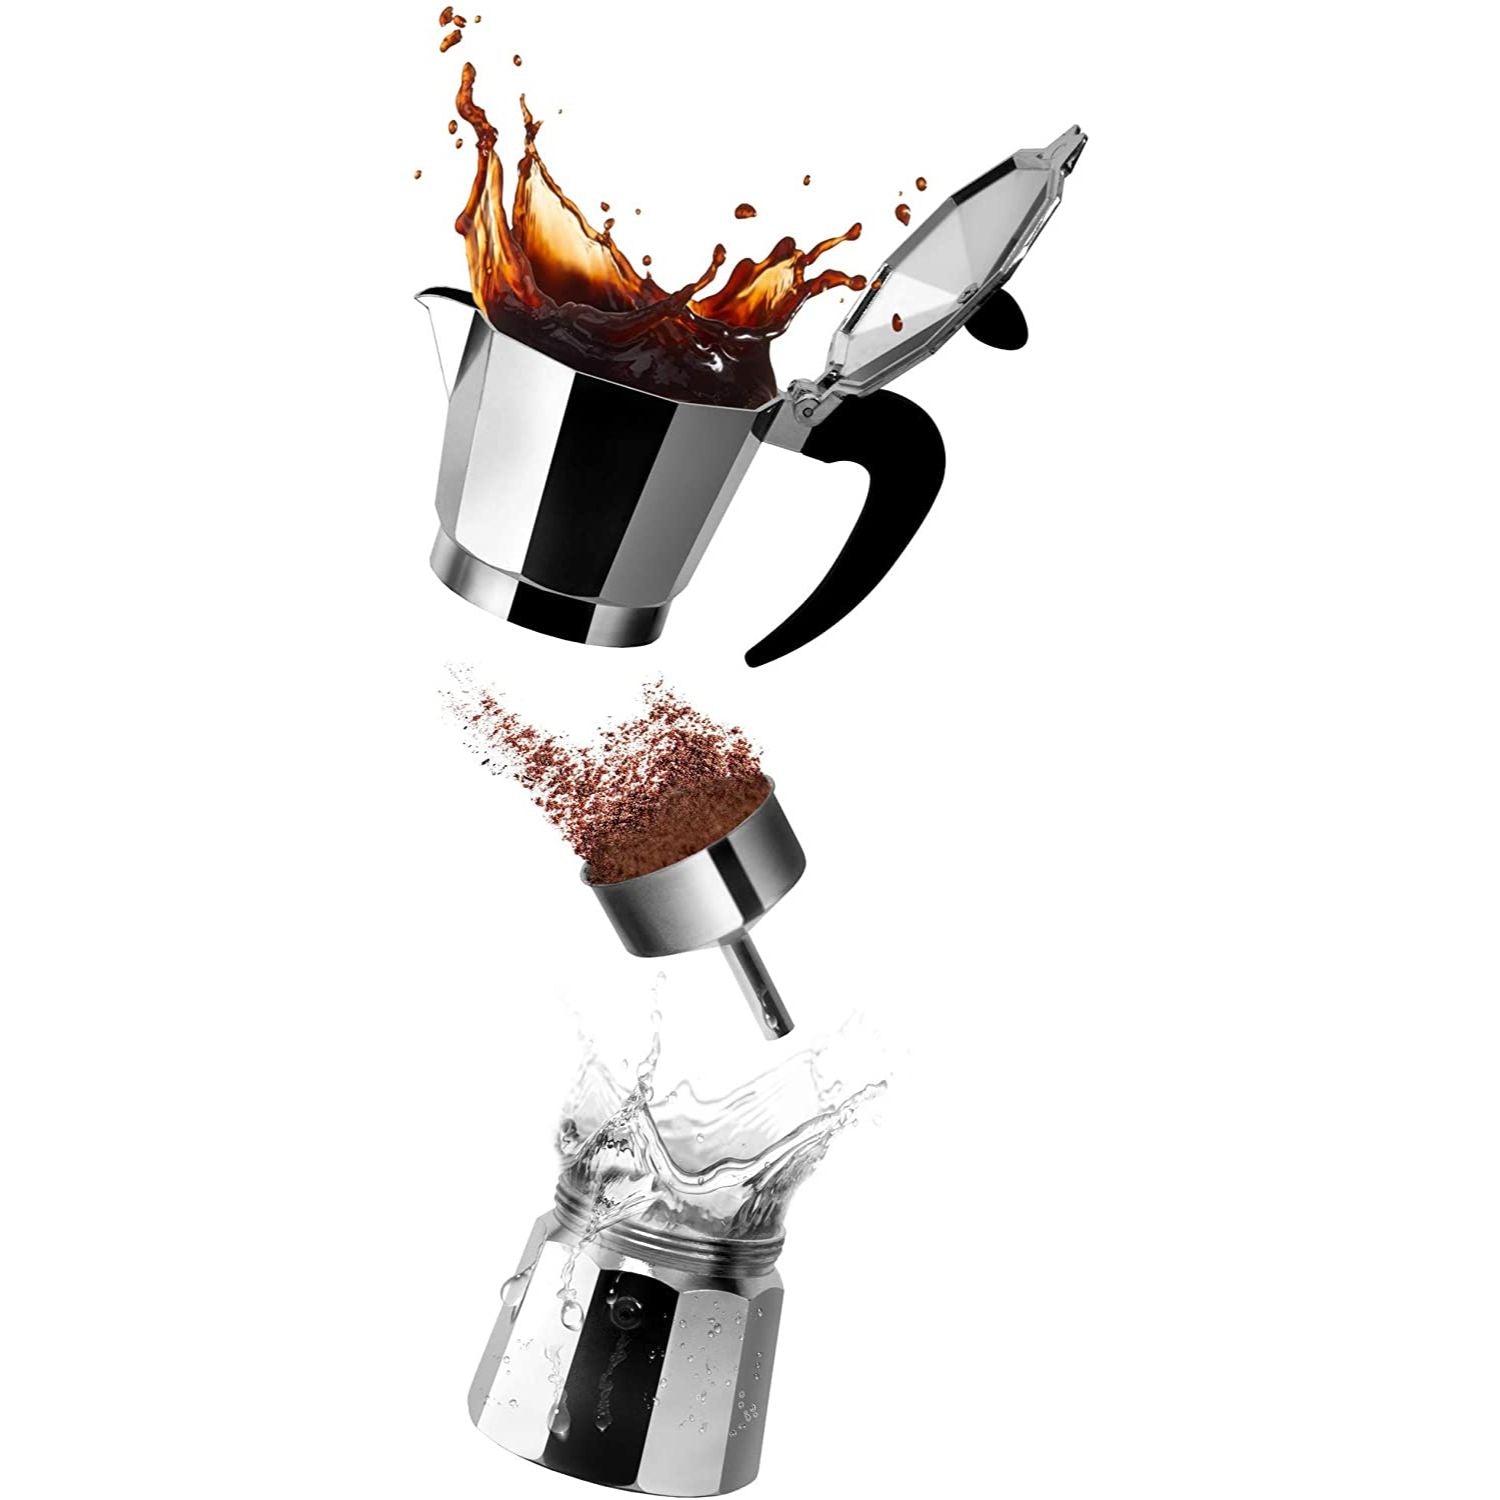 Italian Espresso Maker - Curved Handle